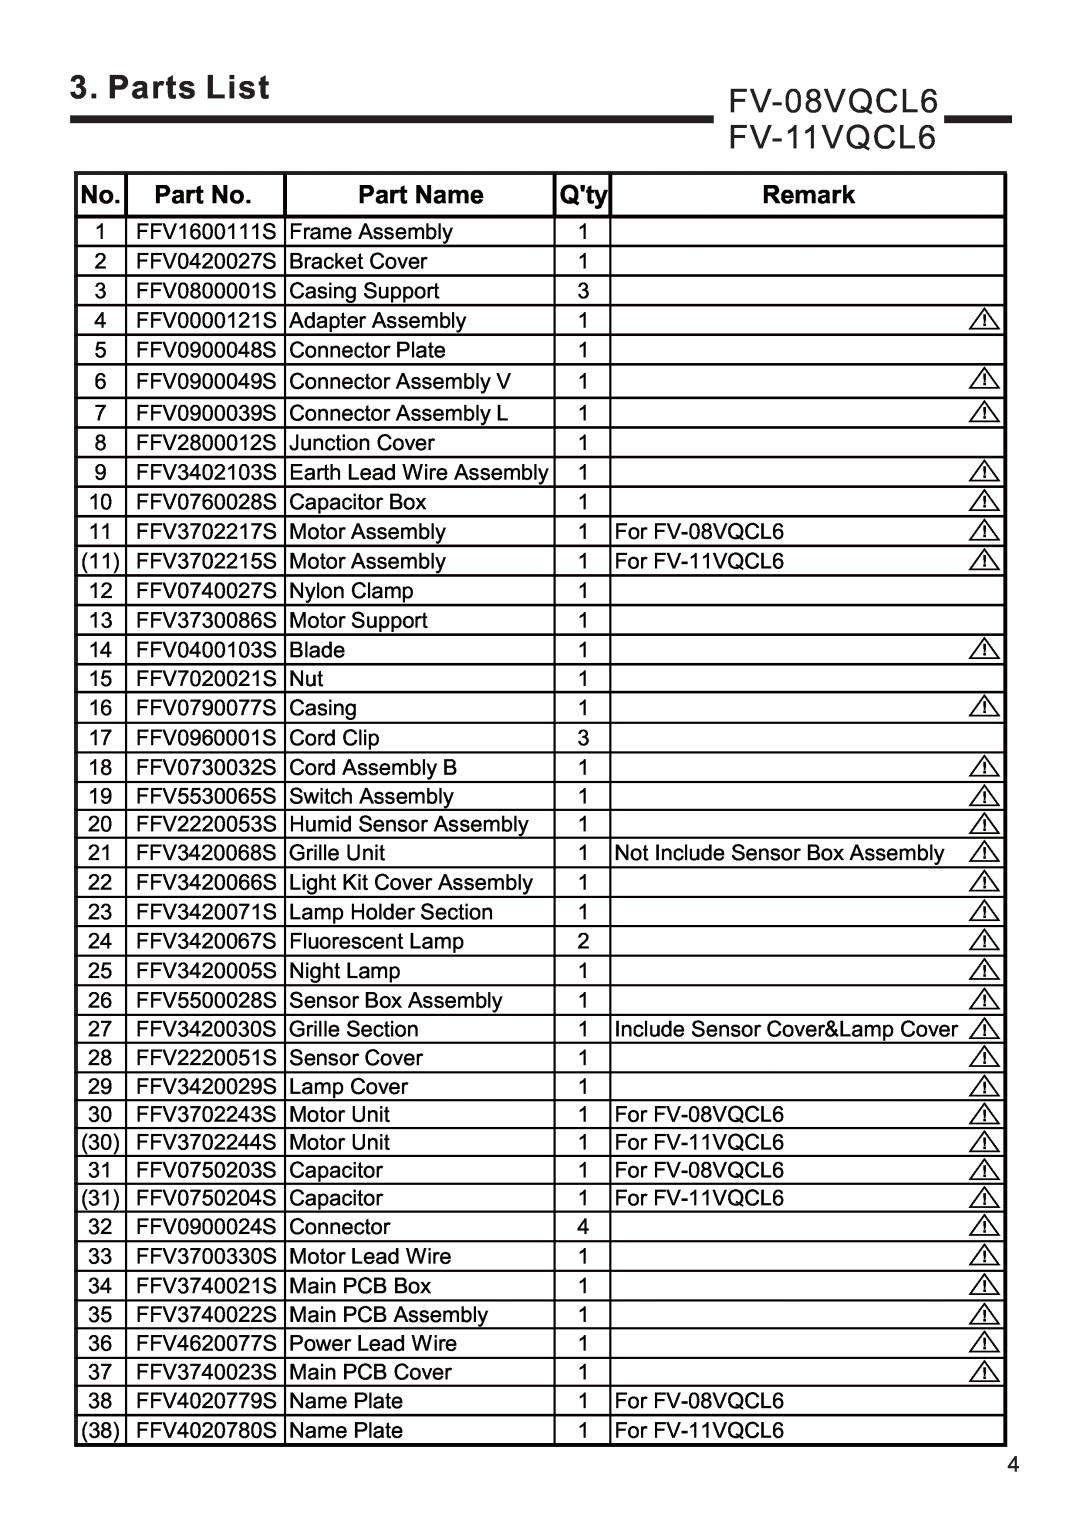 Panasonic FV-08VQCL6 service manual Parts List, Part Name, Remark, FV-11VQCL6 